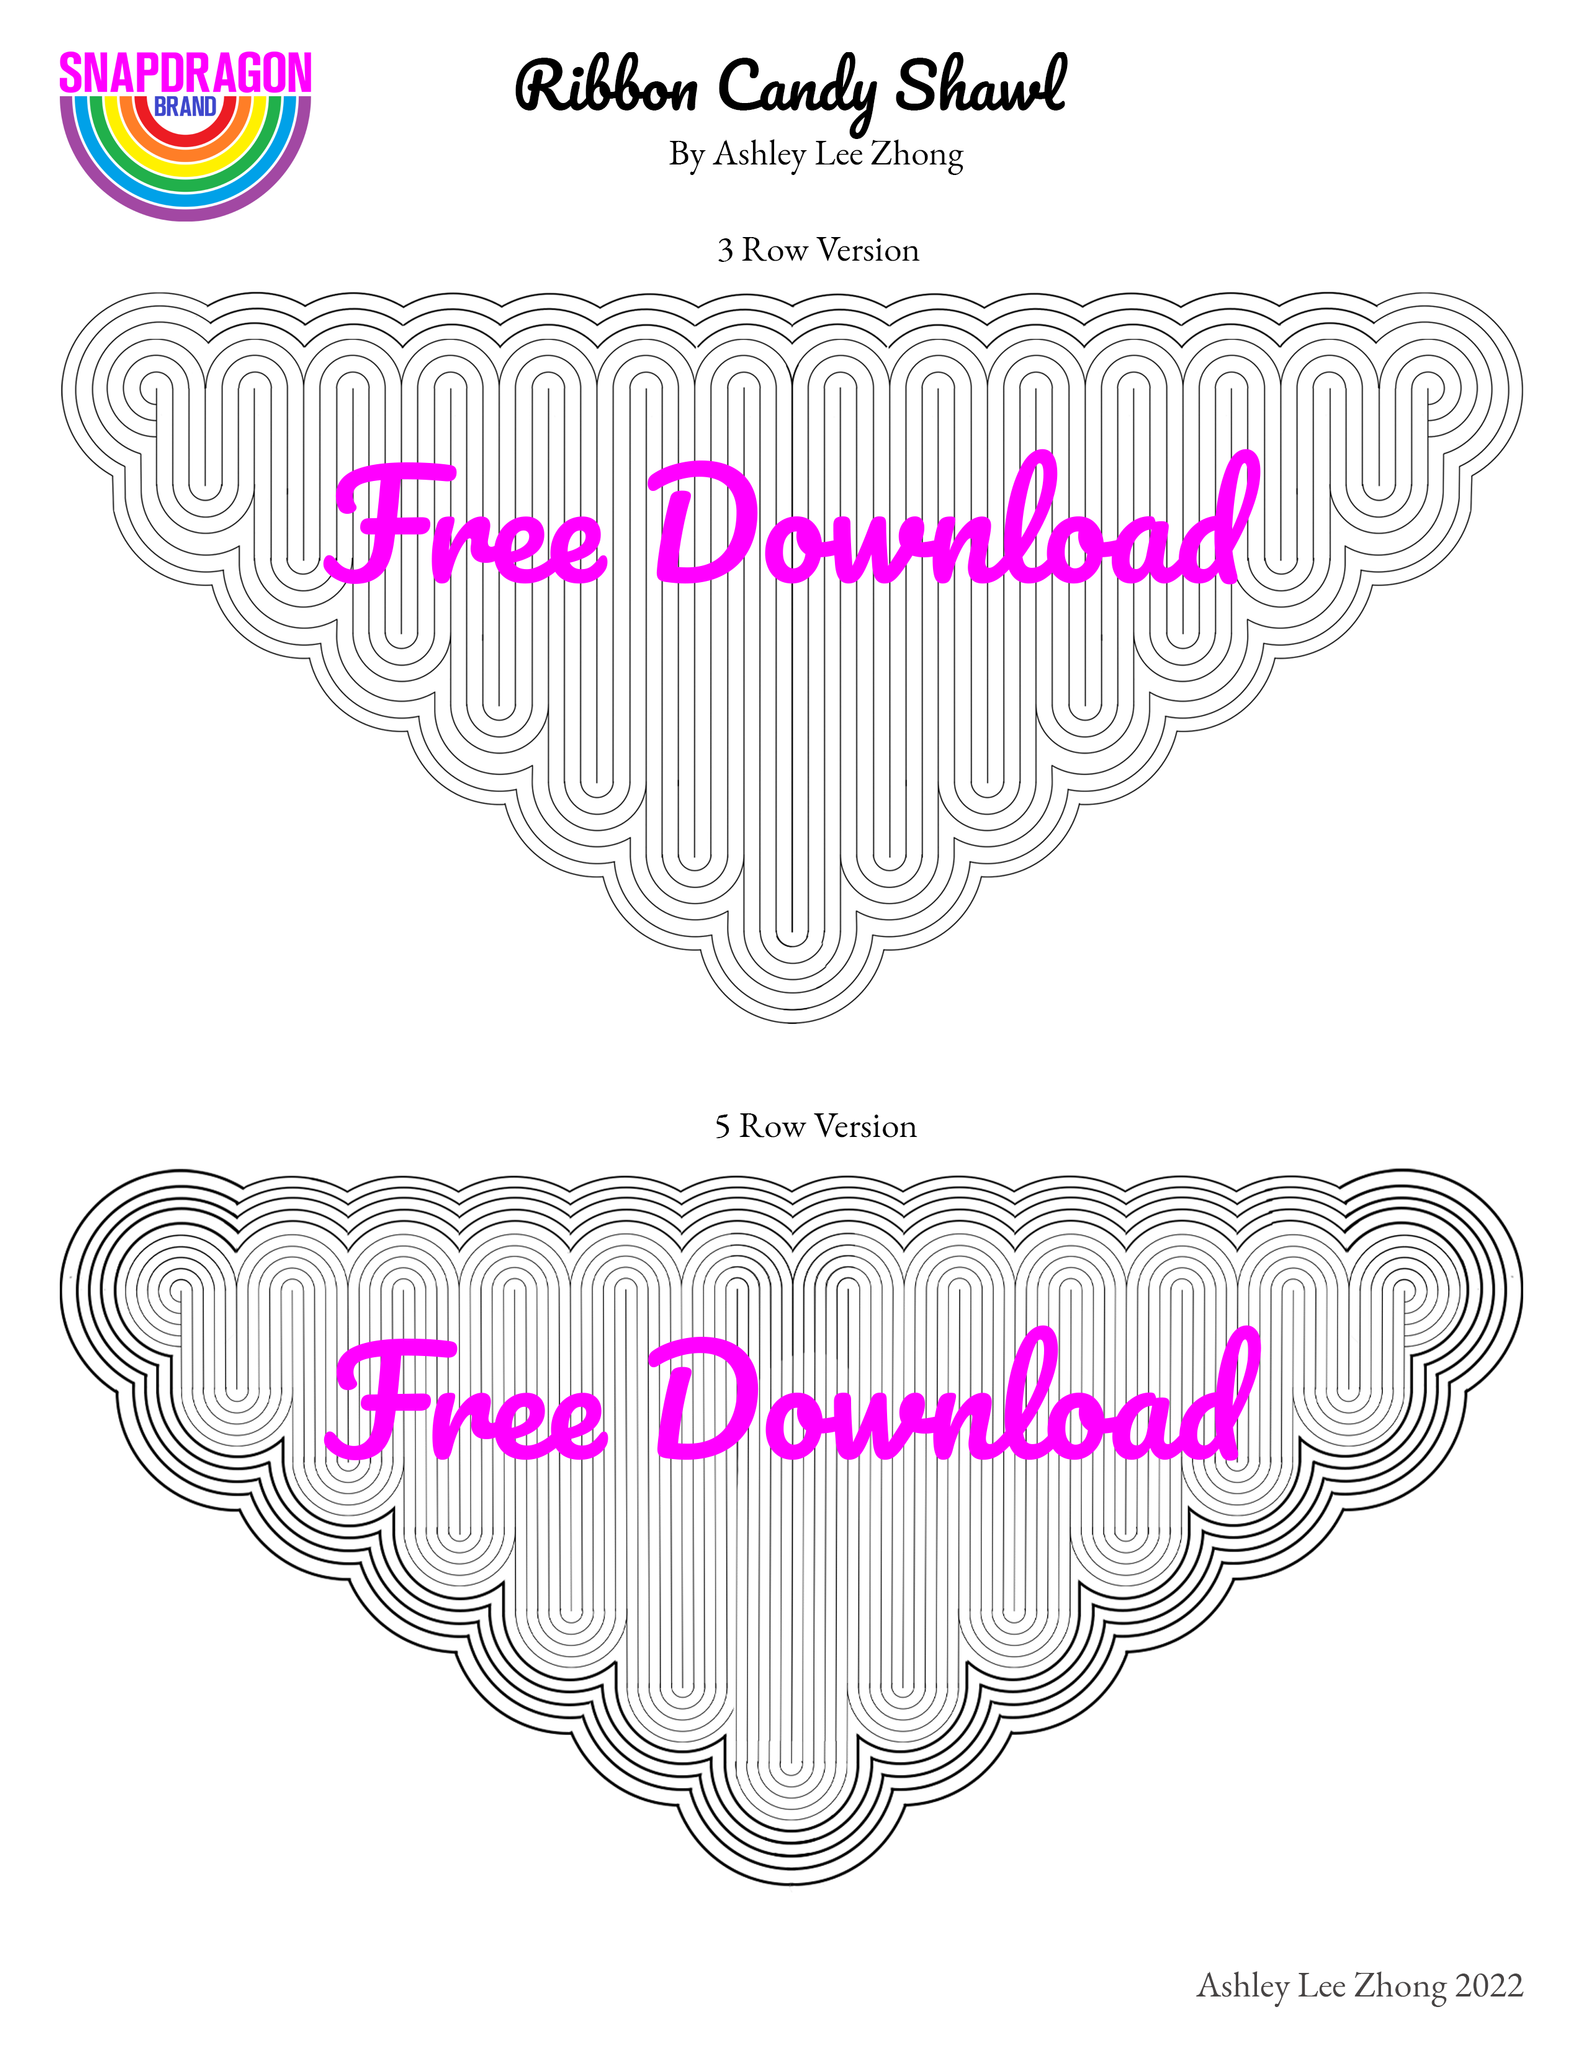 "Ribbon Candy Shawl" Free Downloadable Coloring Sheet